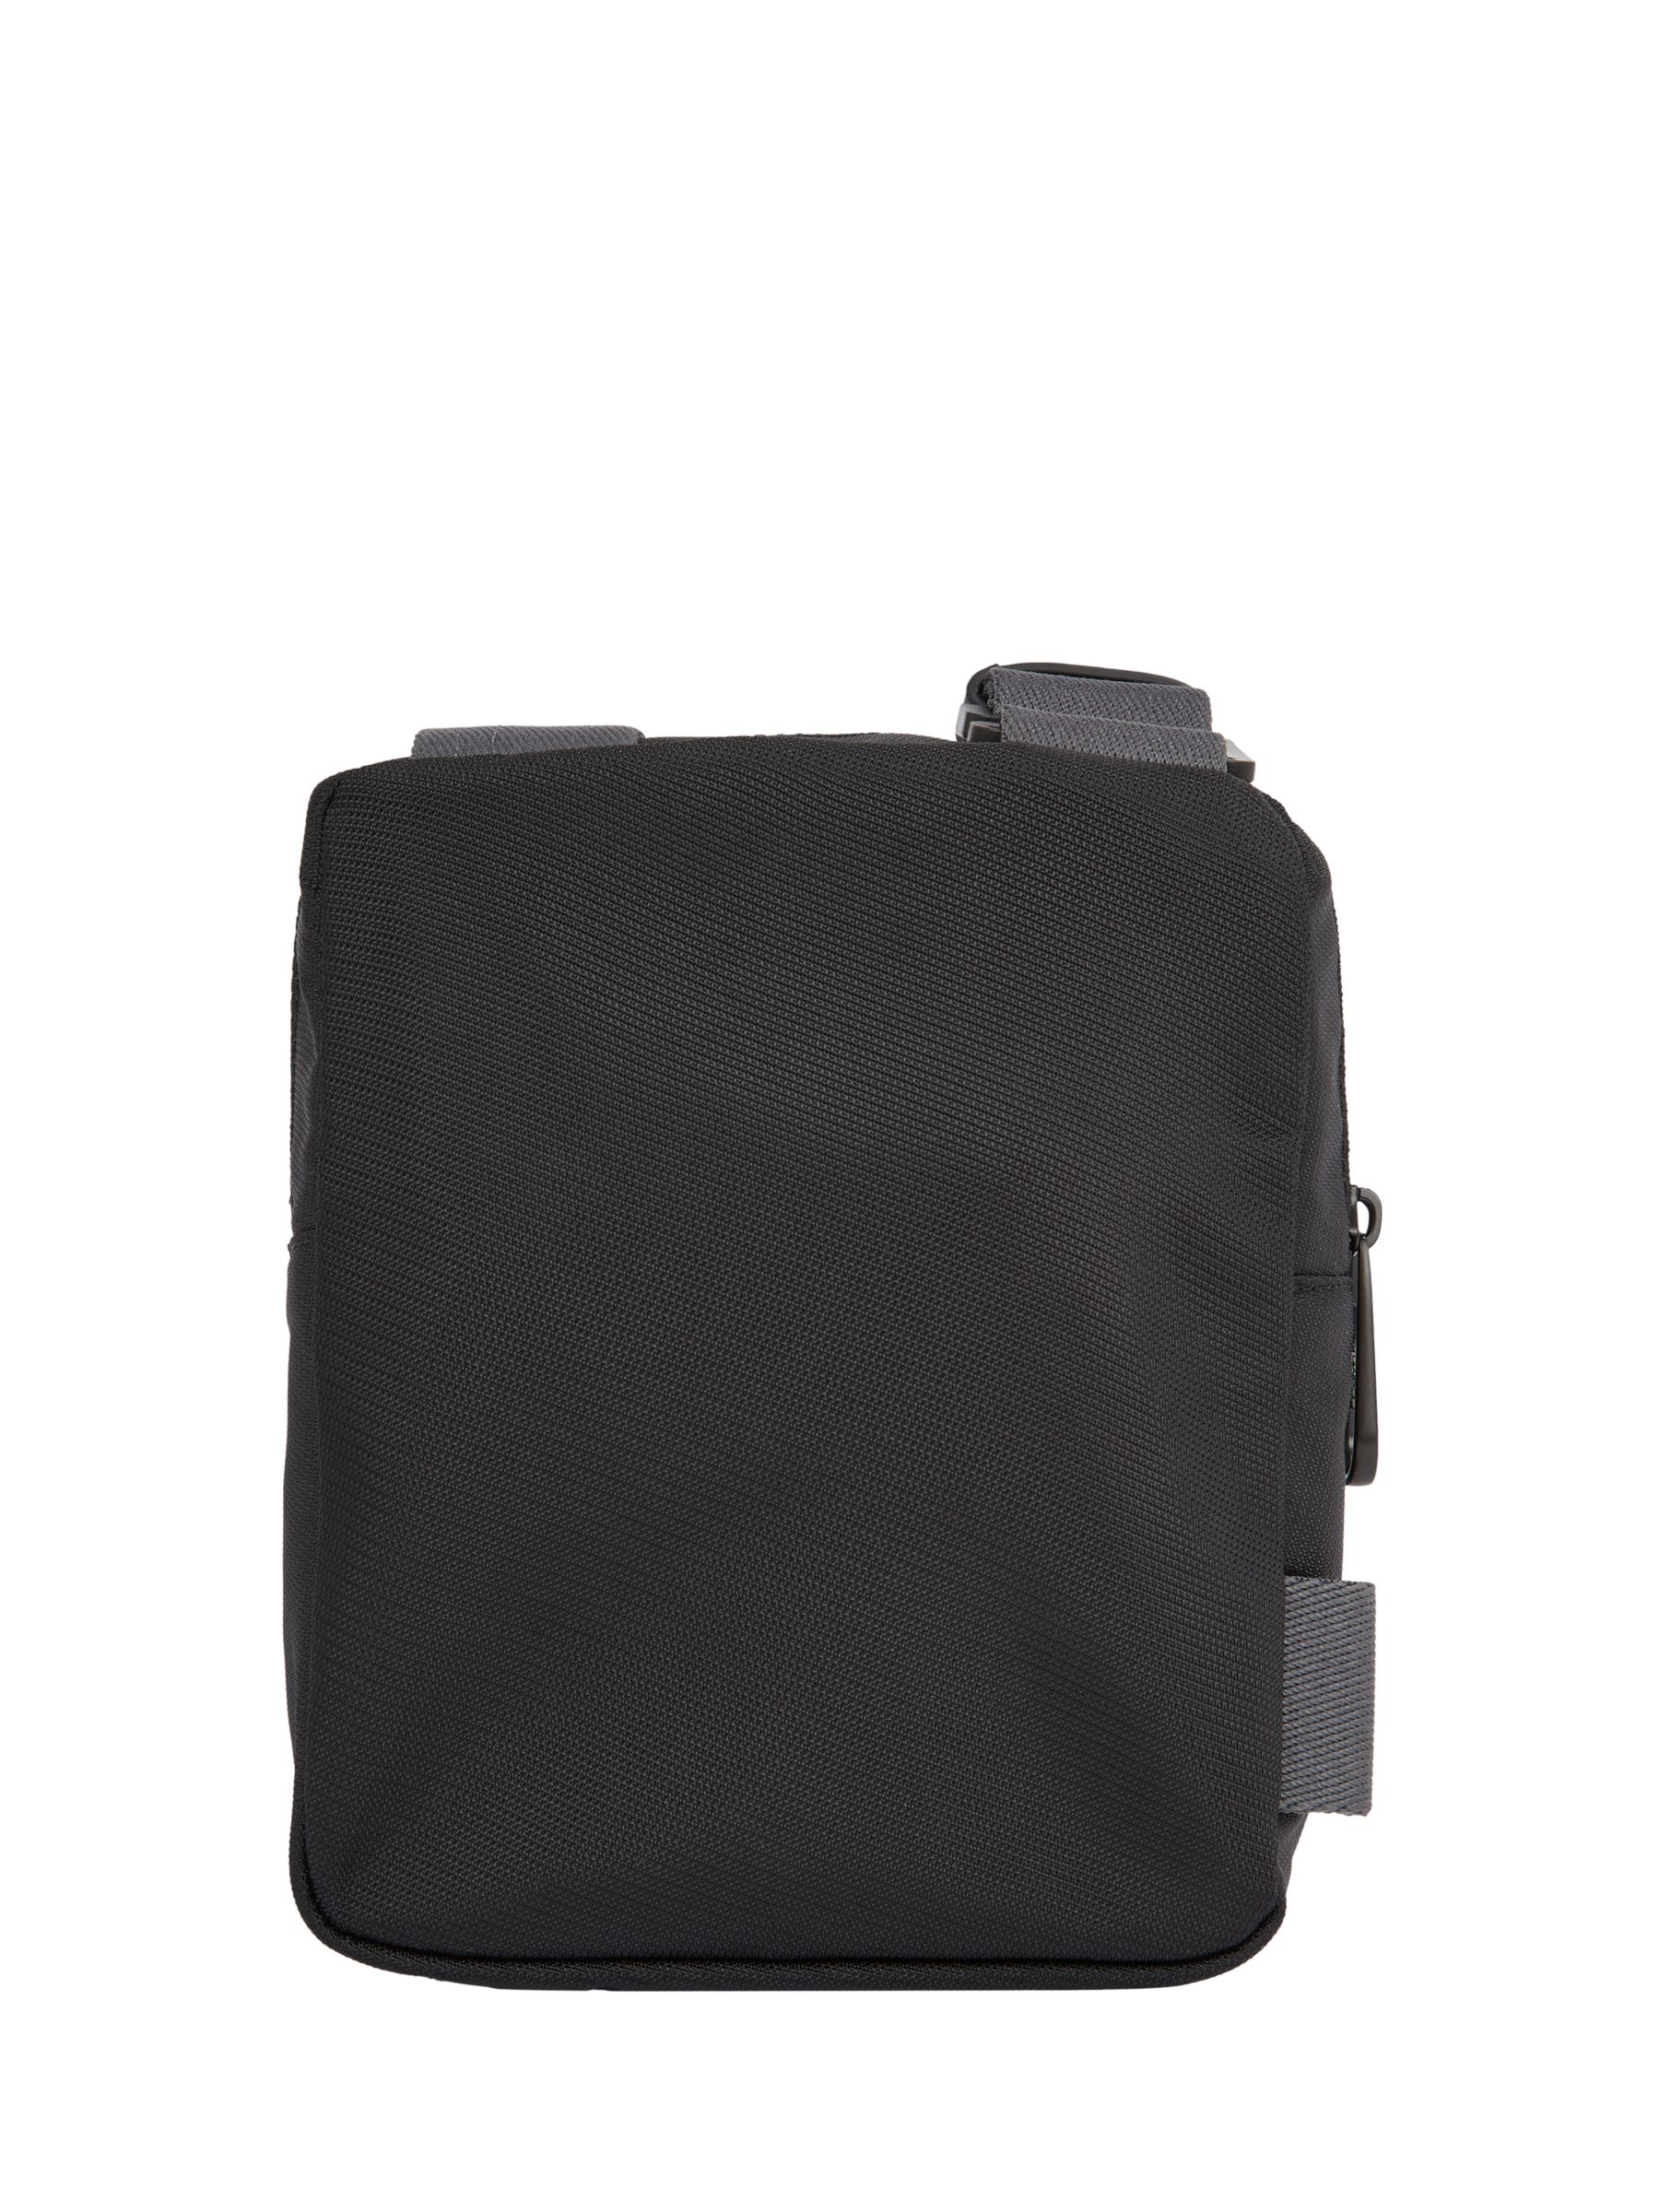 Calvin Klein Essential Messenger Bag, Black, One Size